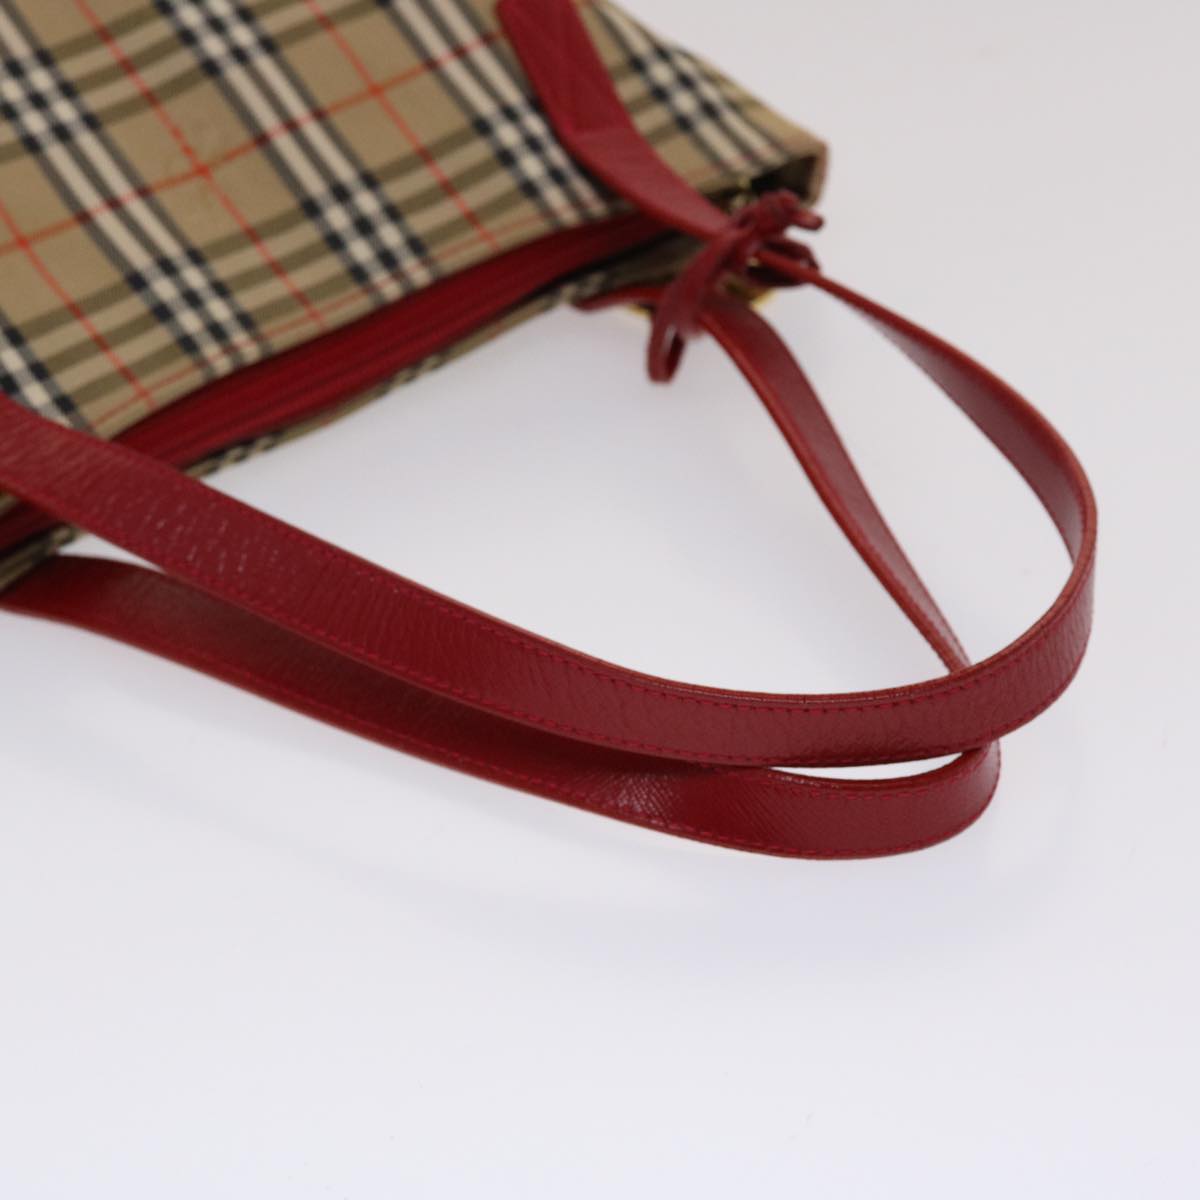 Burberrys Nova Check Shoulder Bag Canvas Leather Beige Red Auth 49086